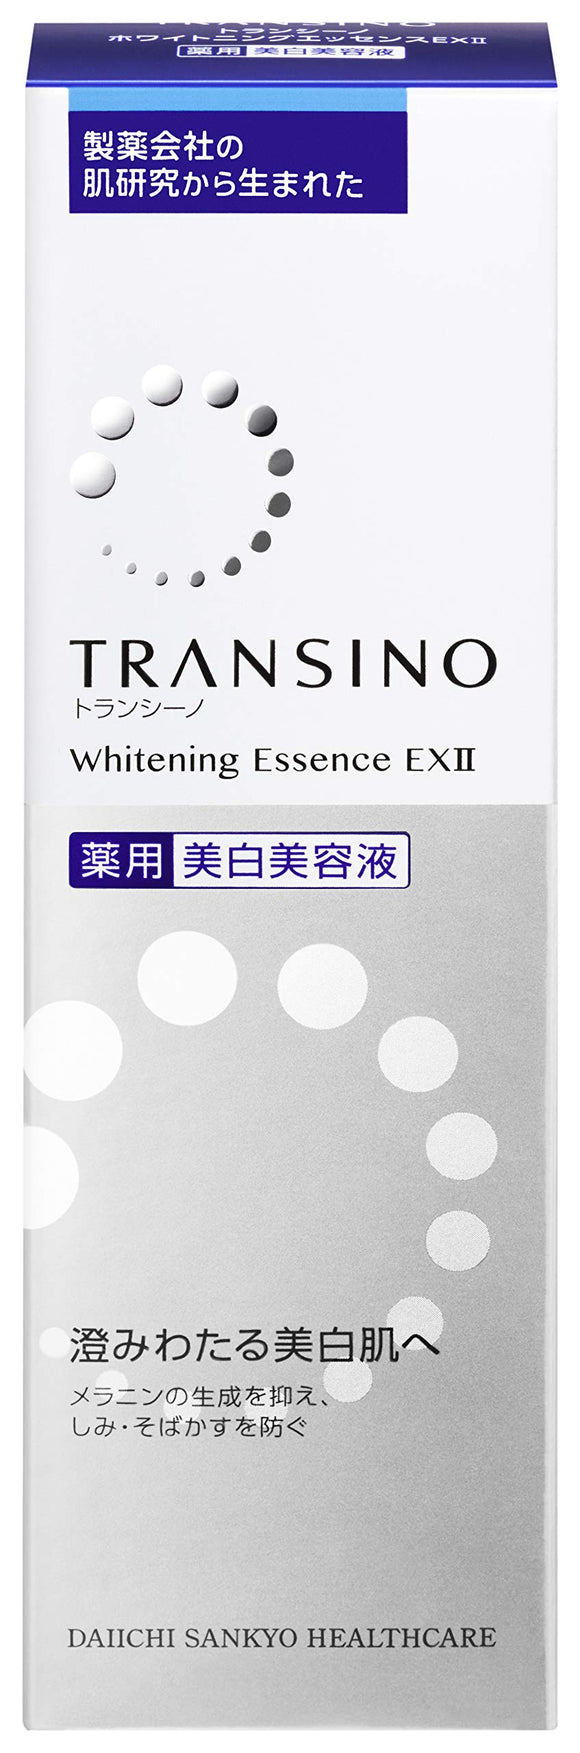 Transino Medicated Whitening Essence EXII Essence 30g